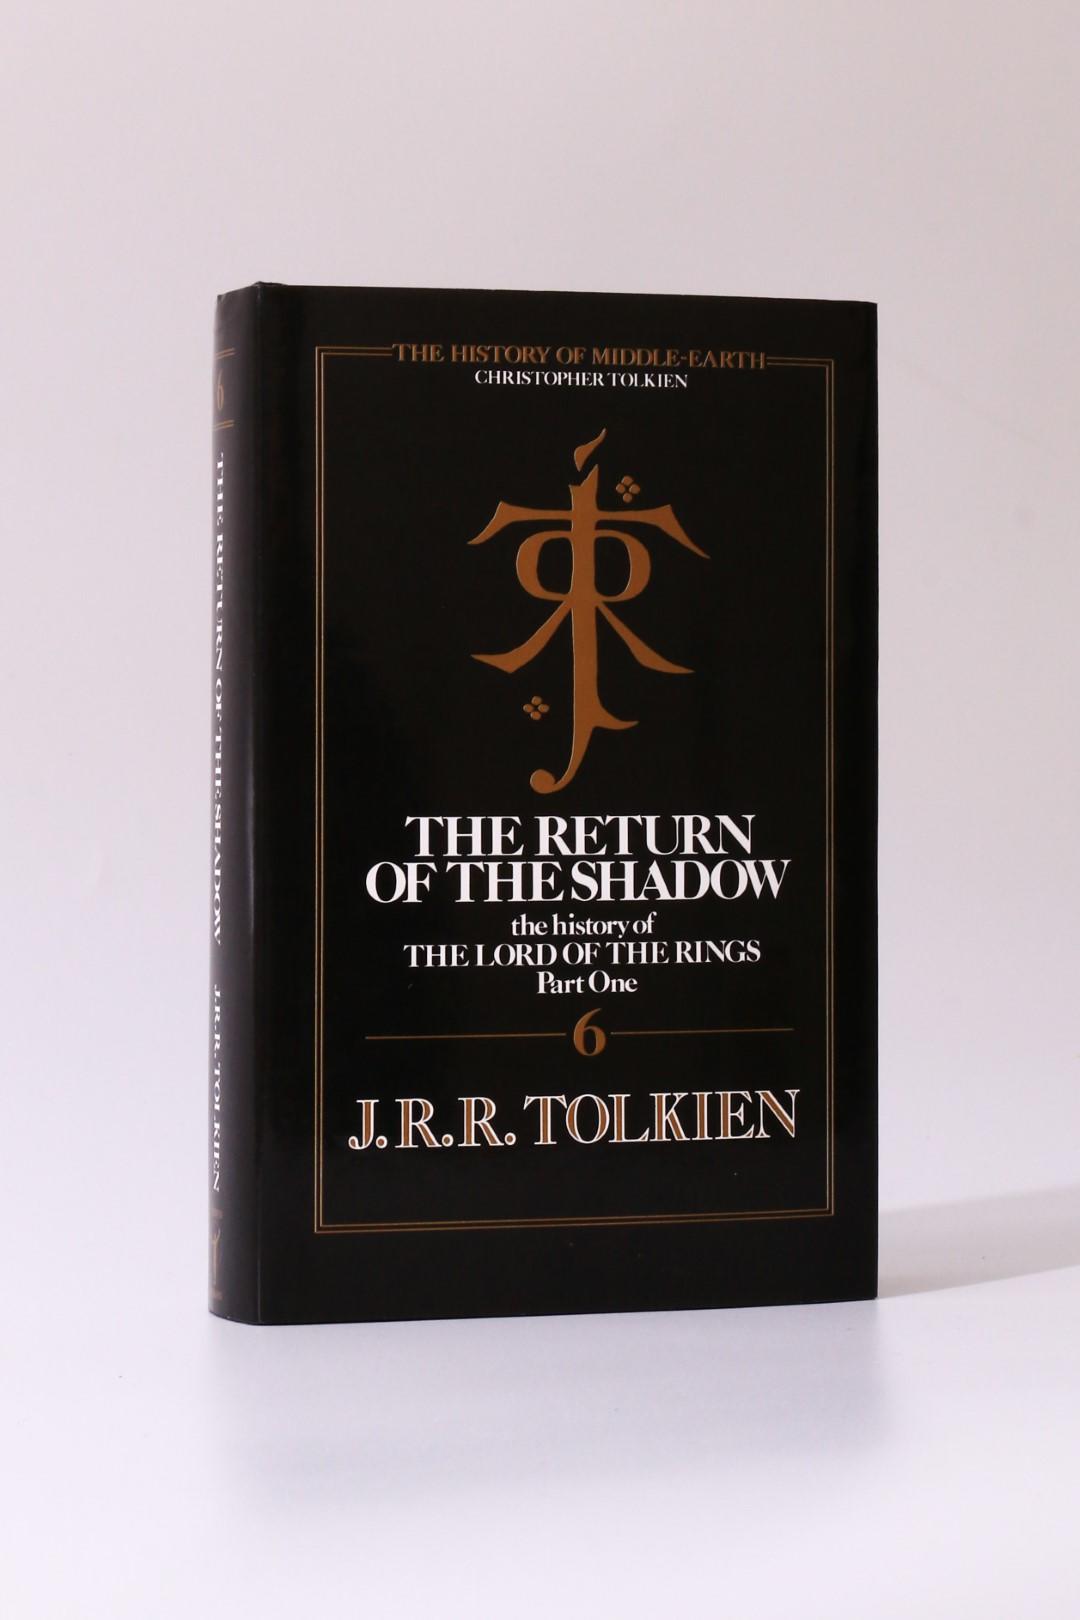 J.R.R. Tolkien - The Return of the Shadow - Unwin Hyman, 1988, First Edition.